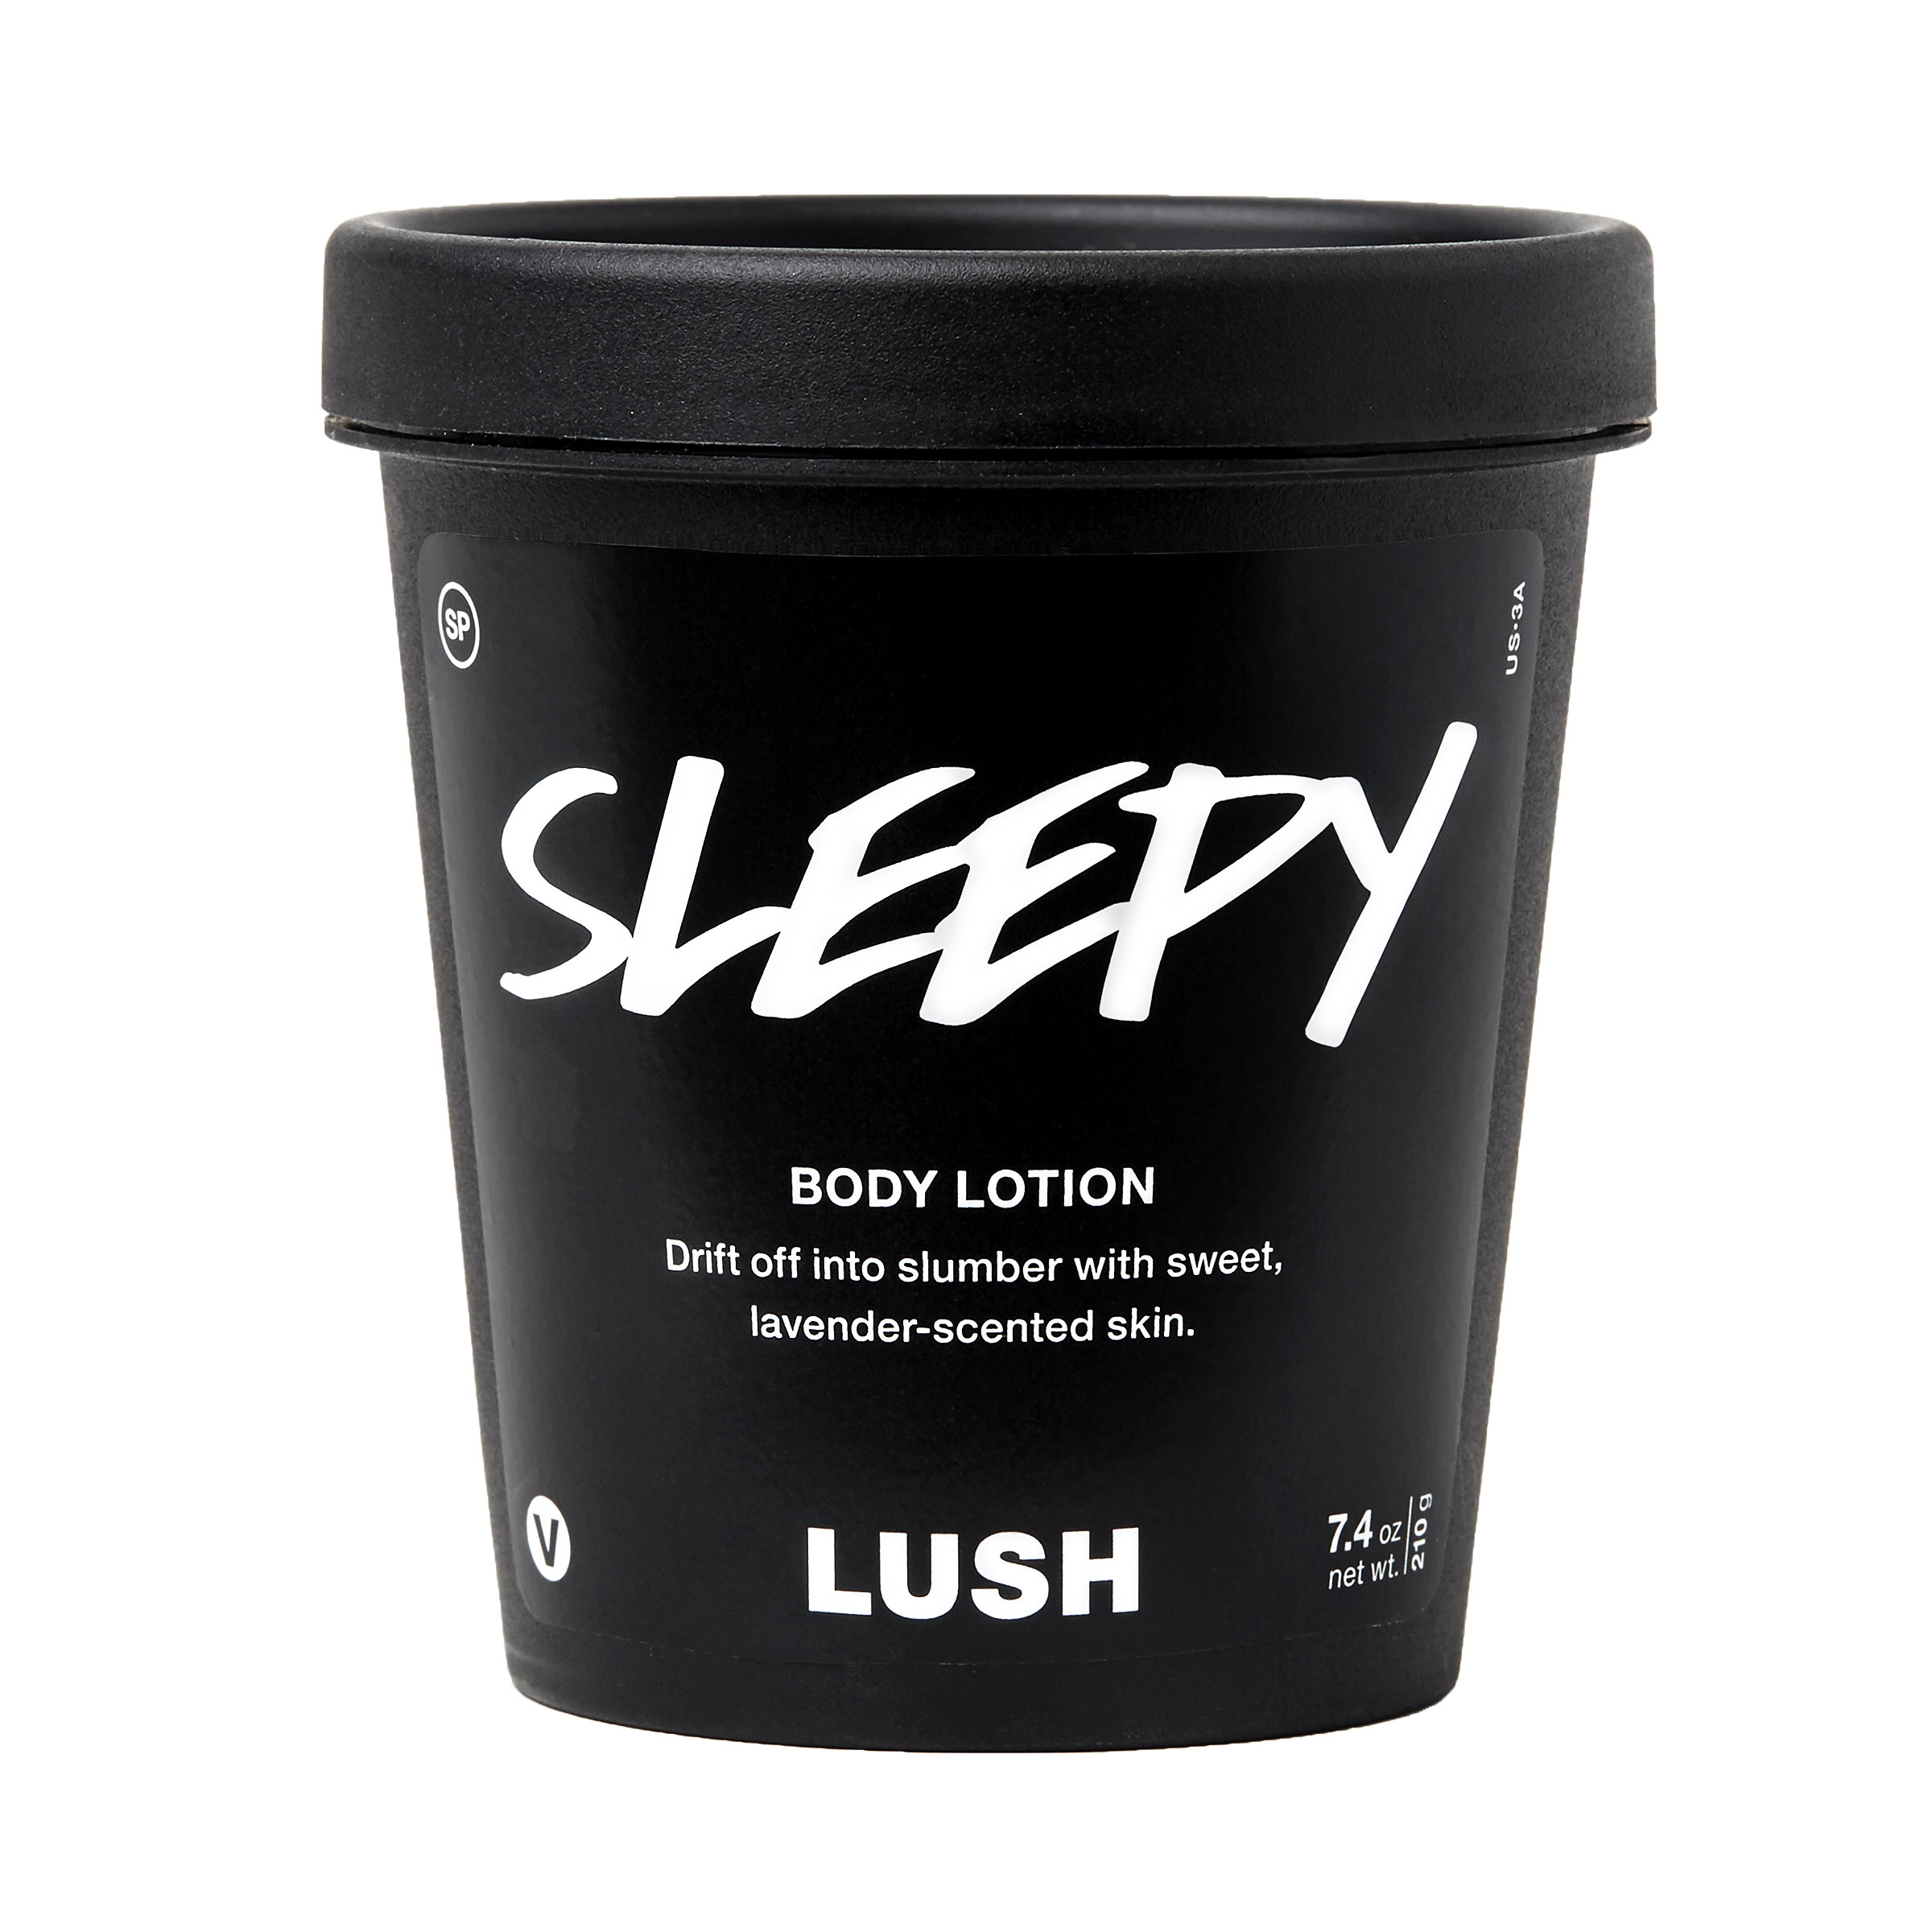 LUSH Sleepy Body Lotion for better sleep